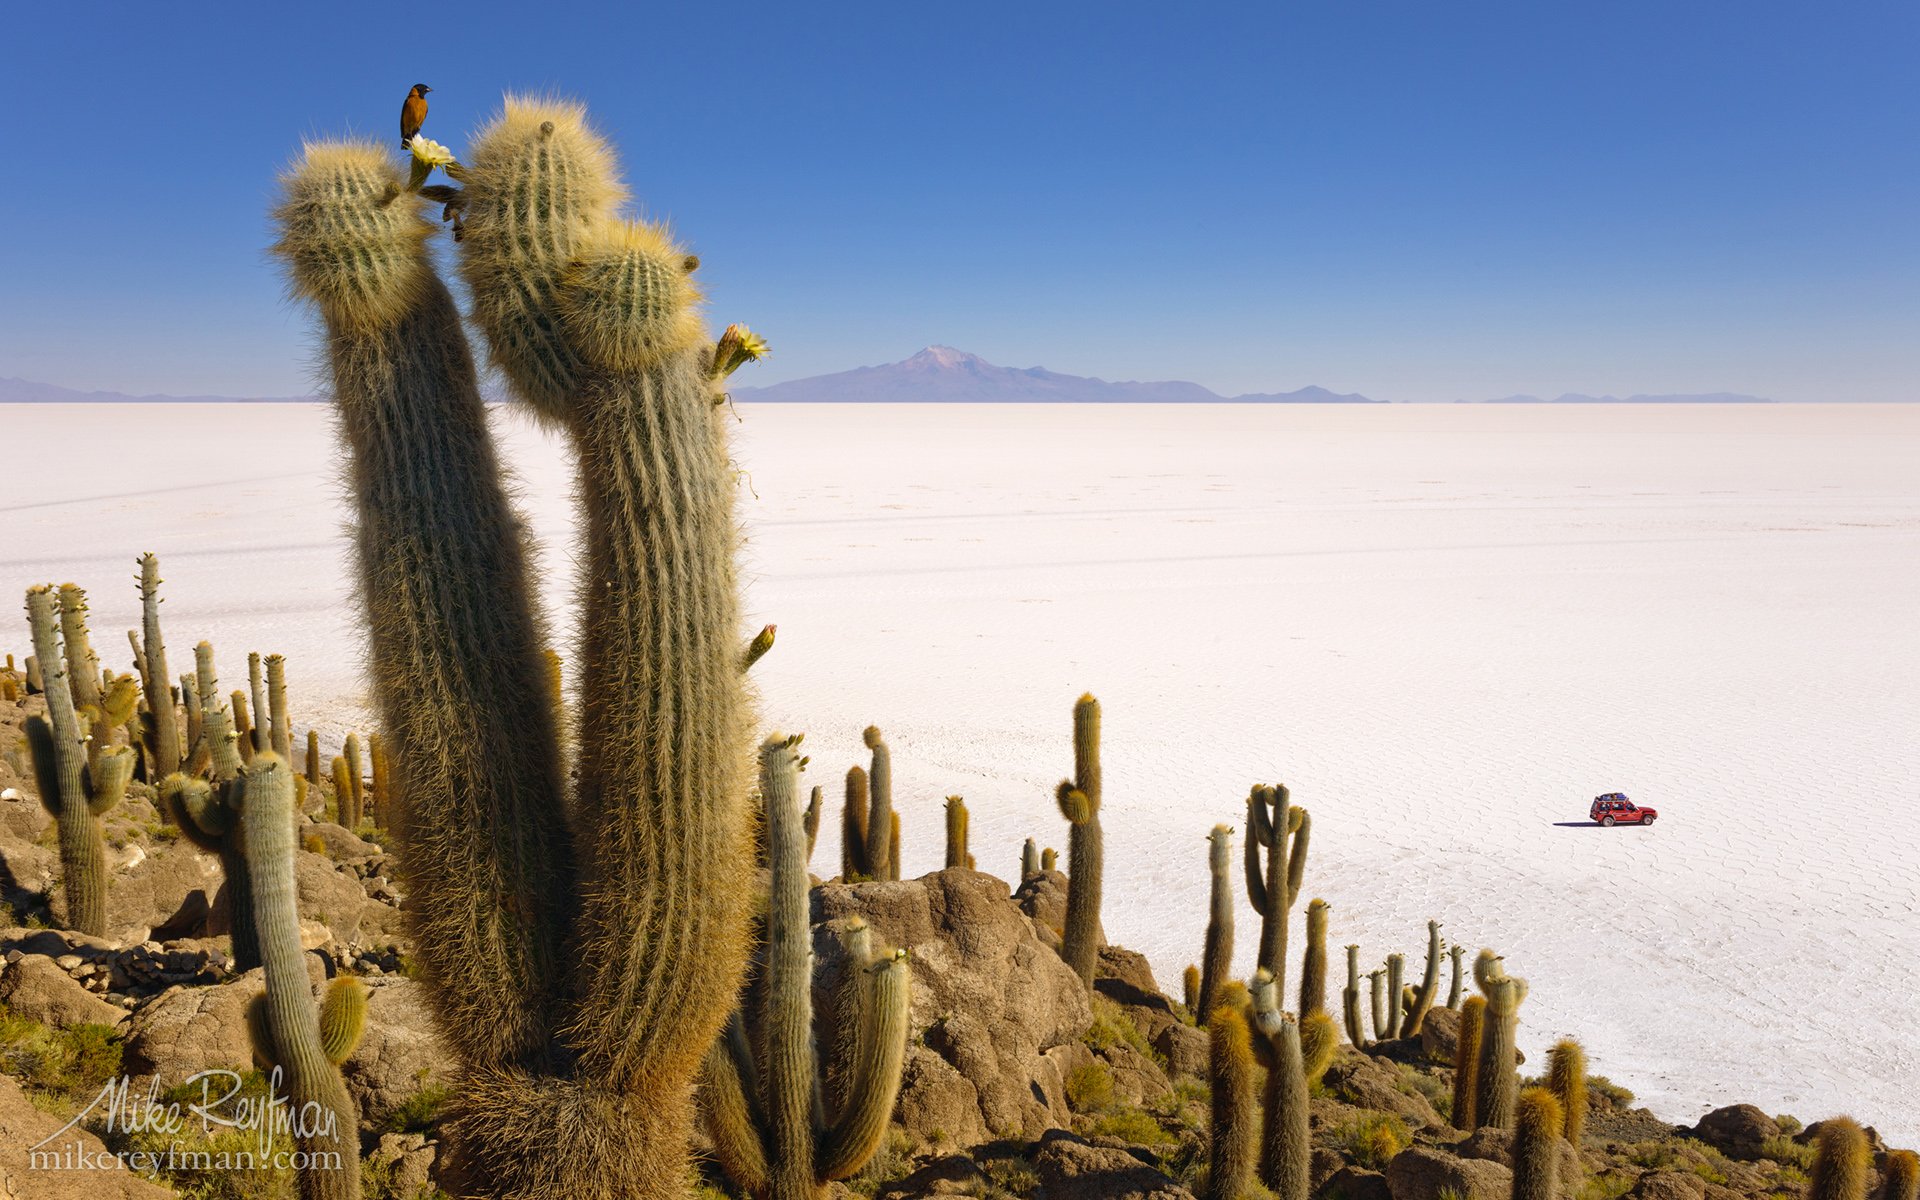 isla incahuasi, altiplano, bolivia, salt, cactus, echinopsis atacamensis, Майк Рейфман